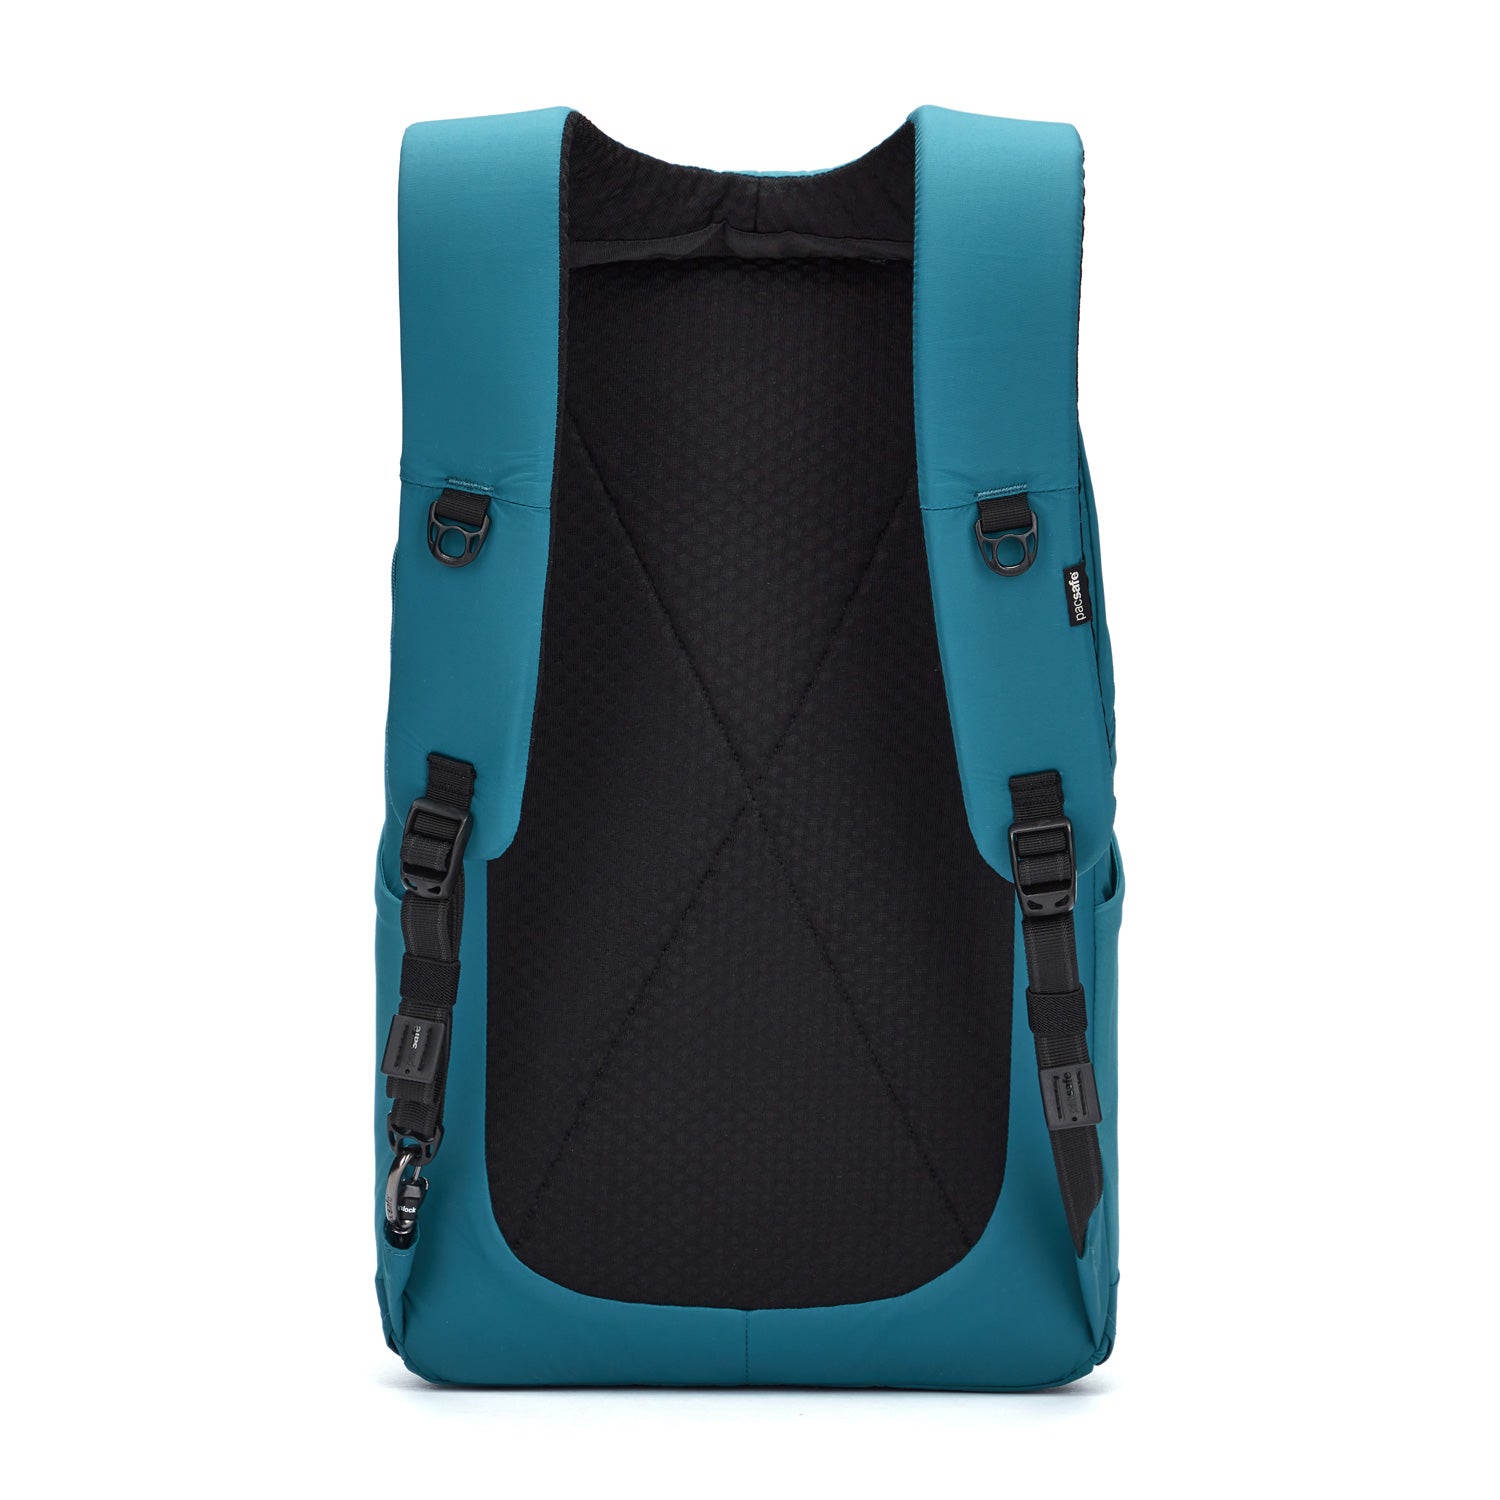 Pacsafe - LS450 Backpack Tidal - Teal-3